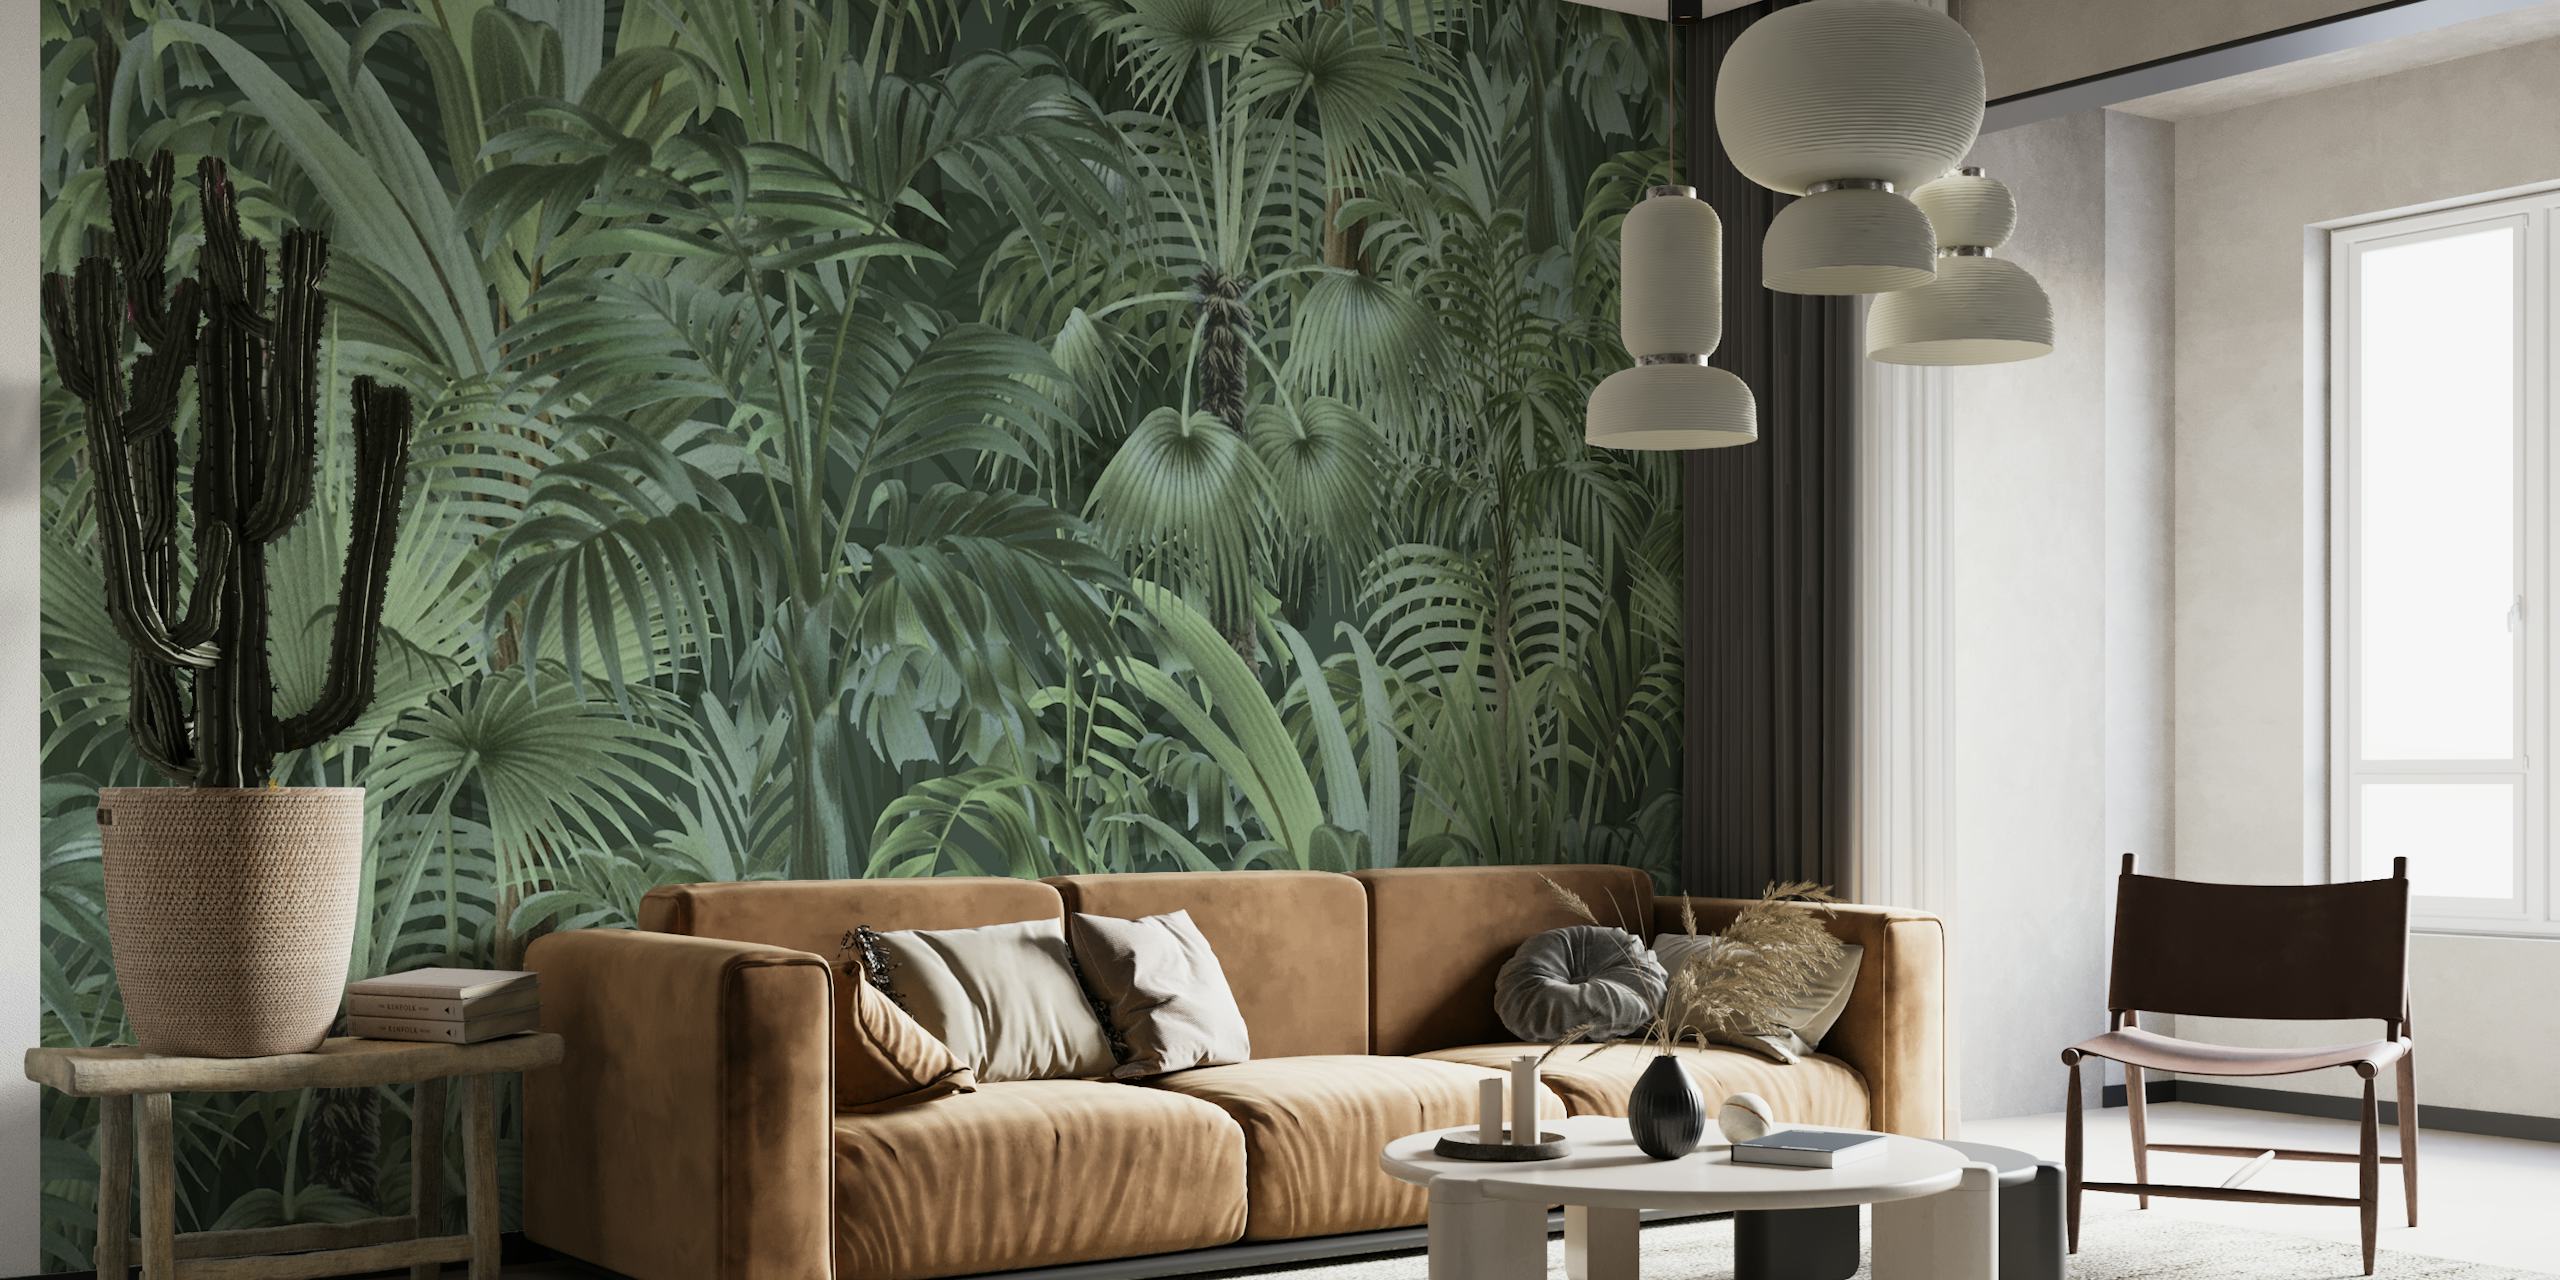 Dense tropical foliage wall mural with varying shades of green, creating an enchanting jungle atmosphere.